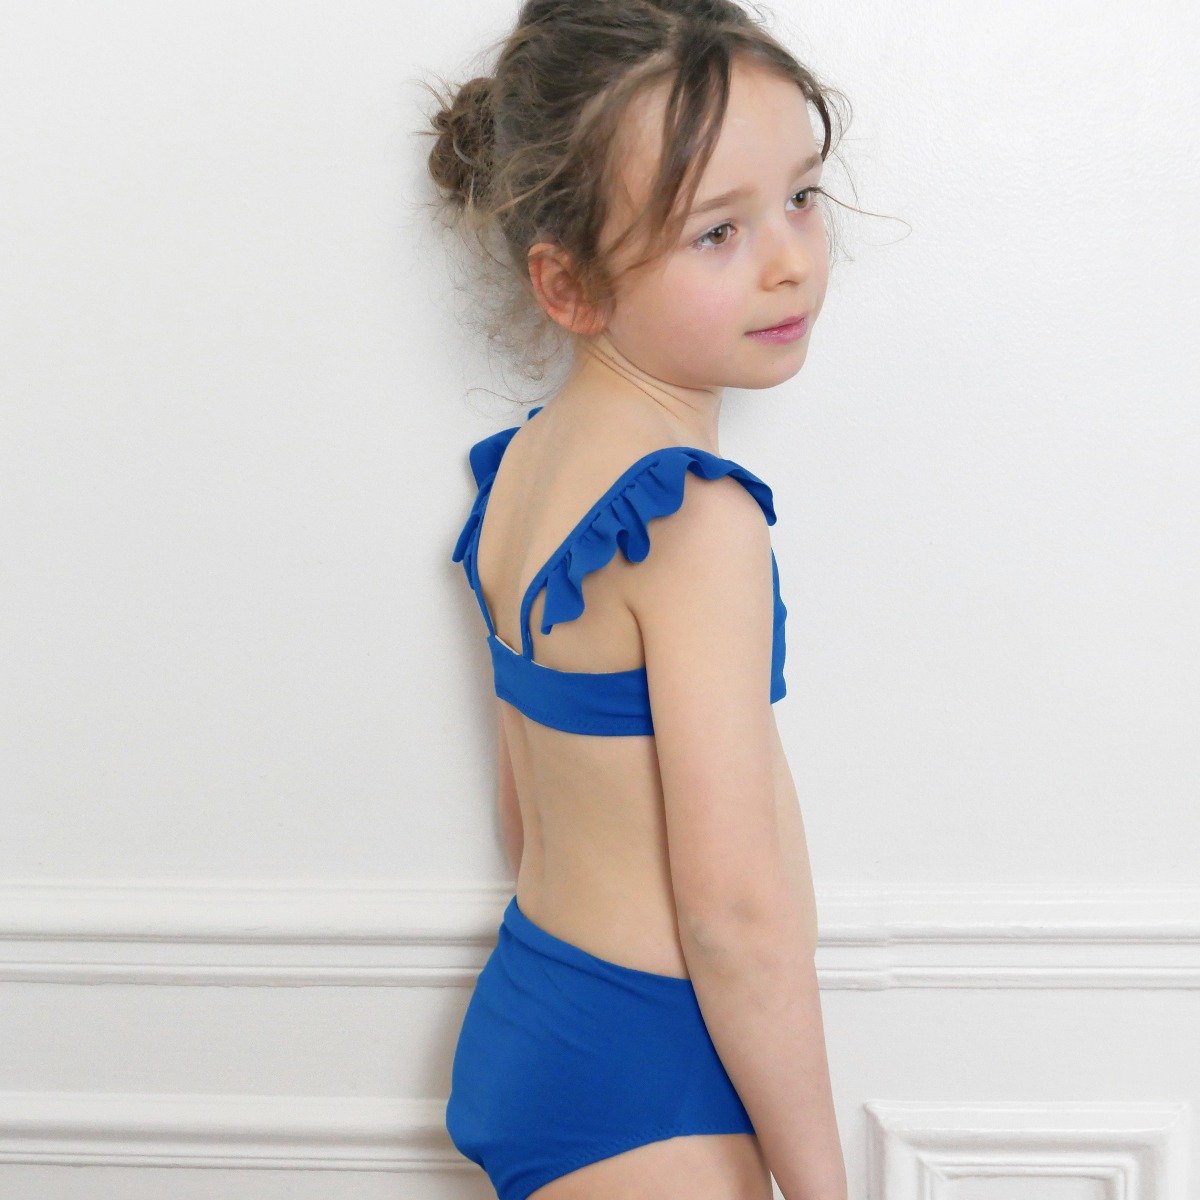 Ikatee - PAULETTE swimsuit - Girl 3/12 - Paper Sewing Pattern